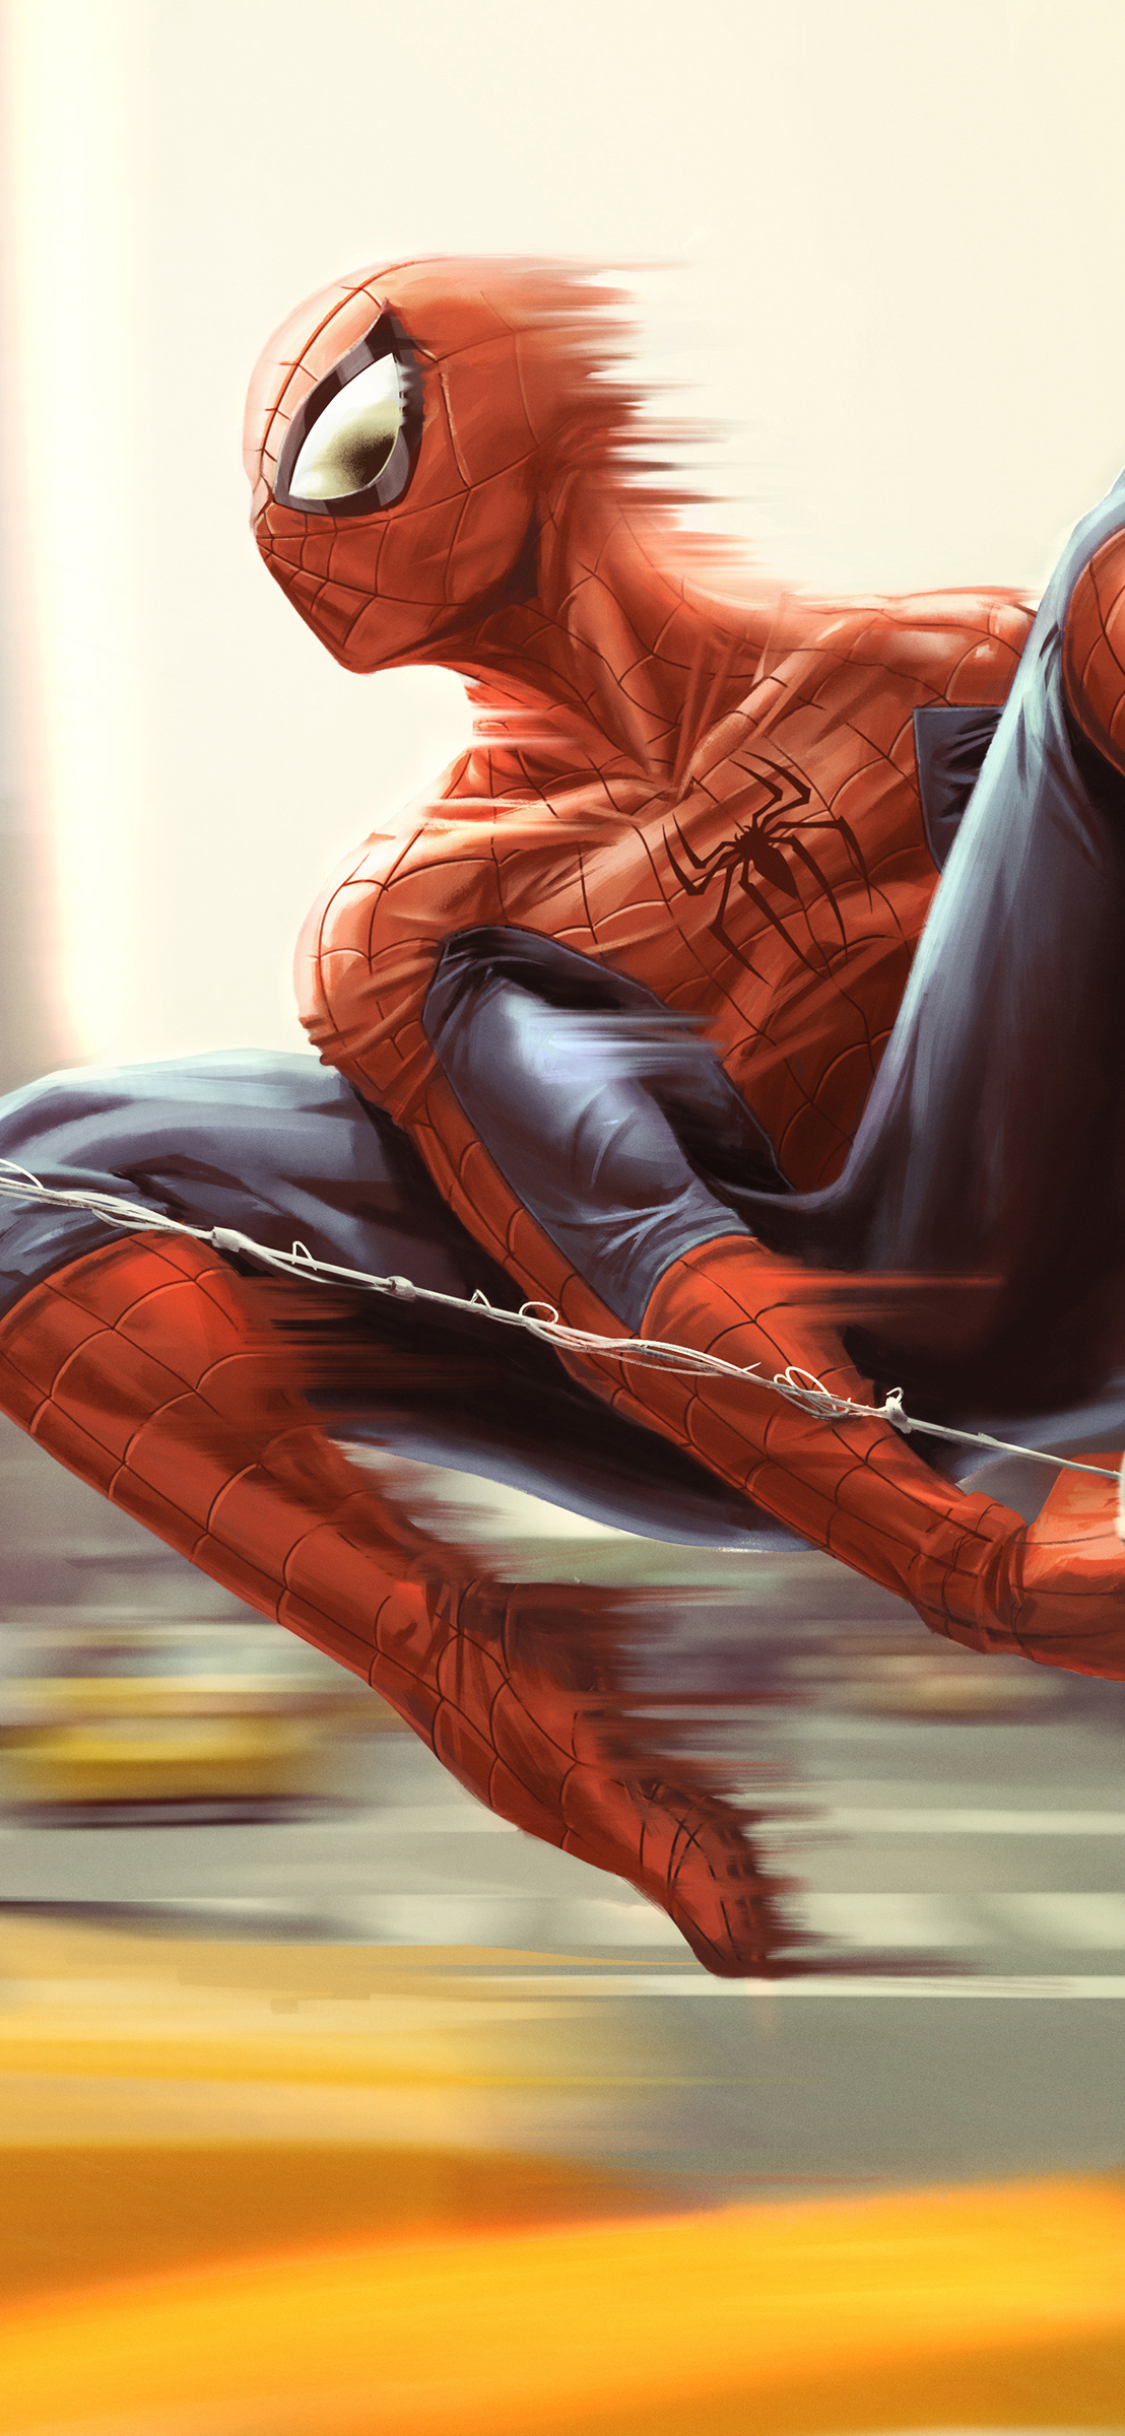 Spider-Man Phone Wallpaper by Tom Velez